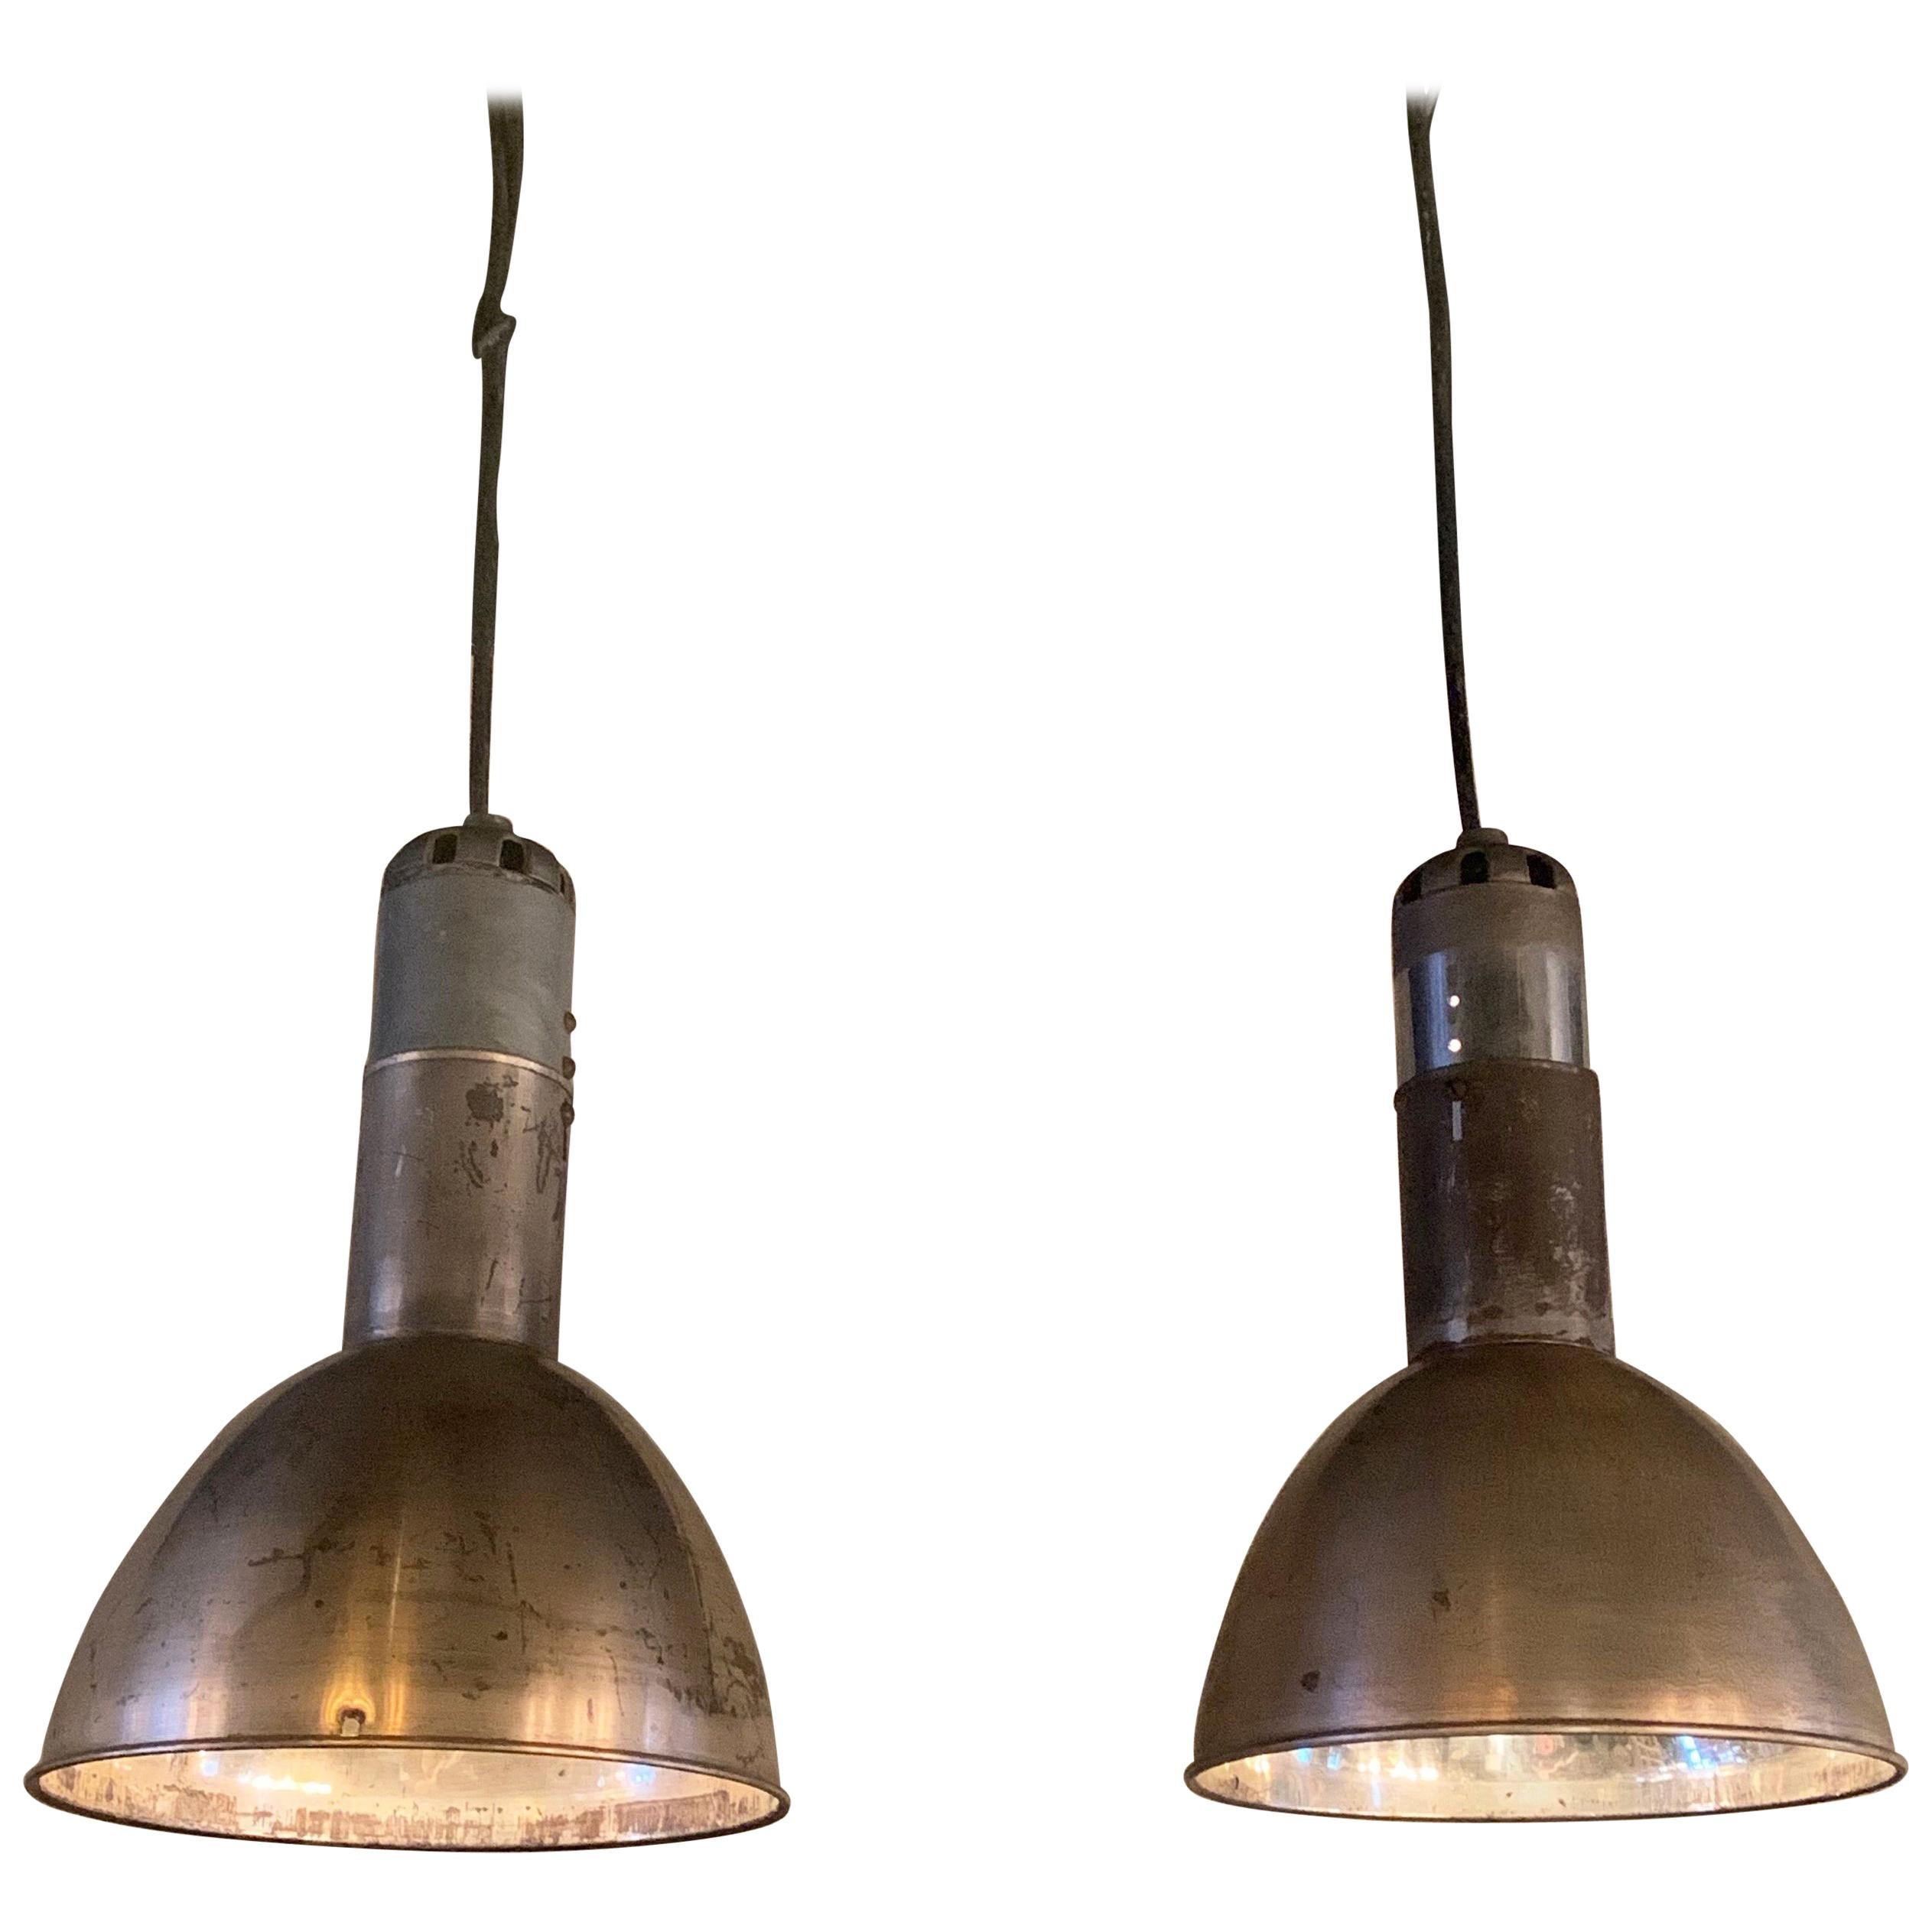 Pair of Industrial Nickel-Plated Steel Dome Factory Pendant Lights